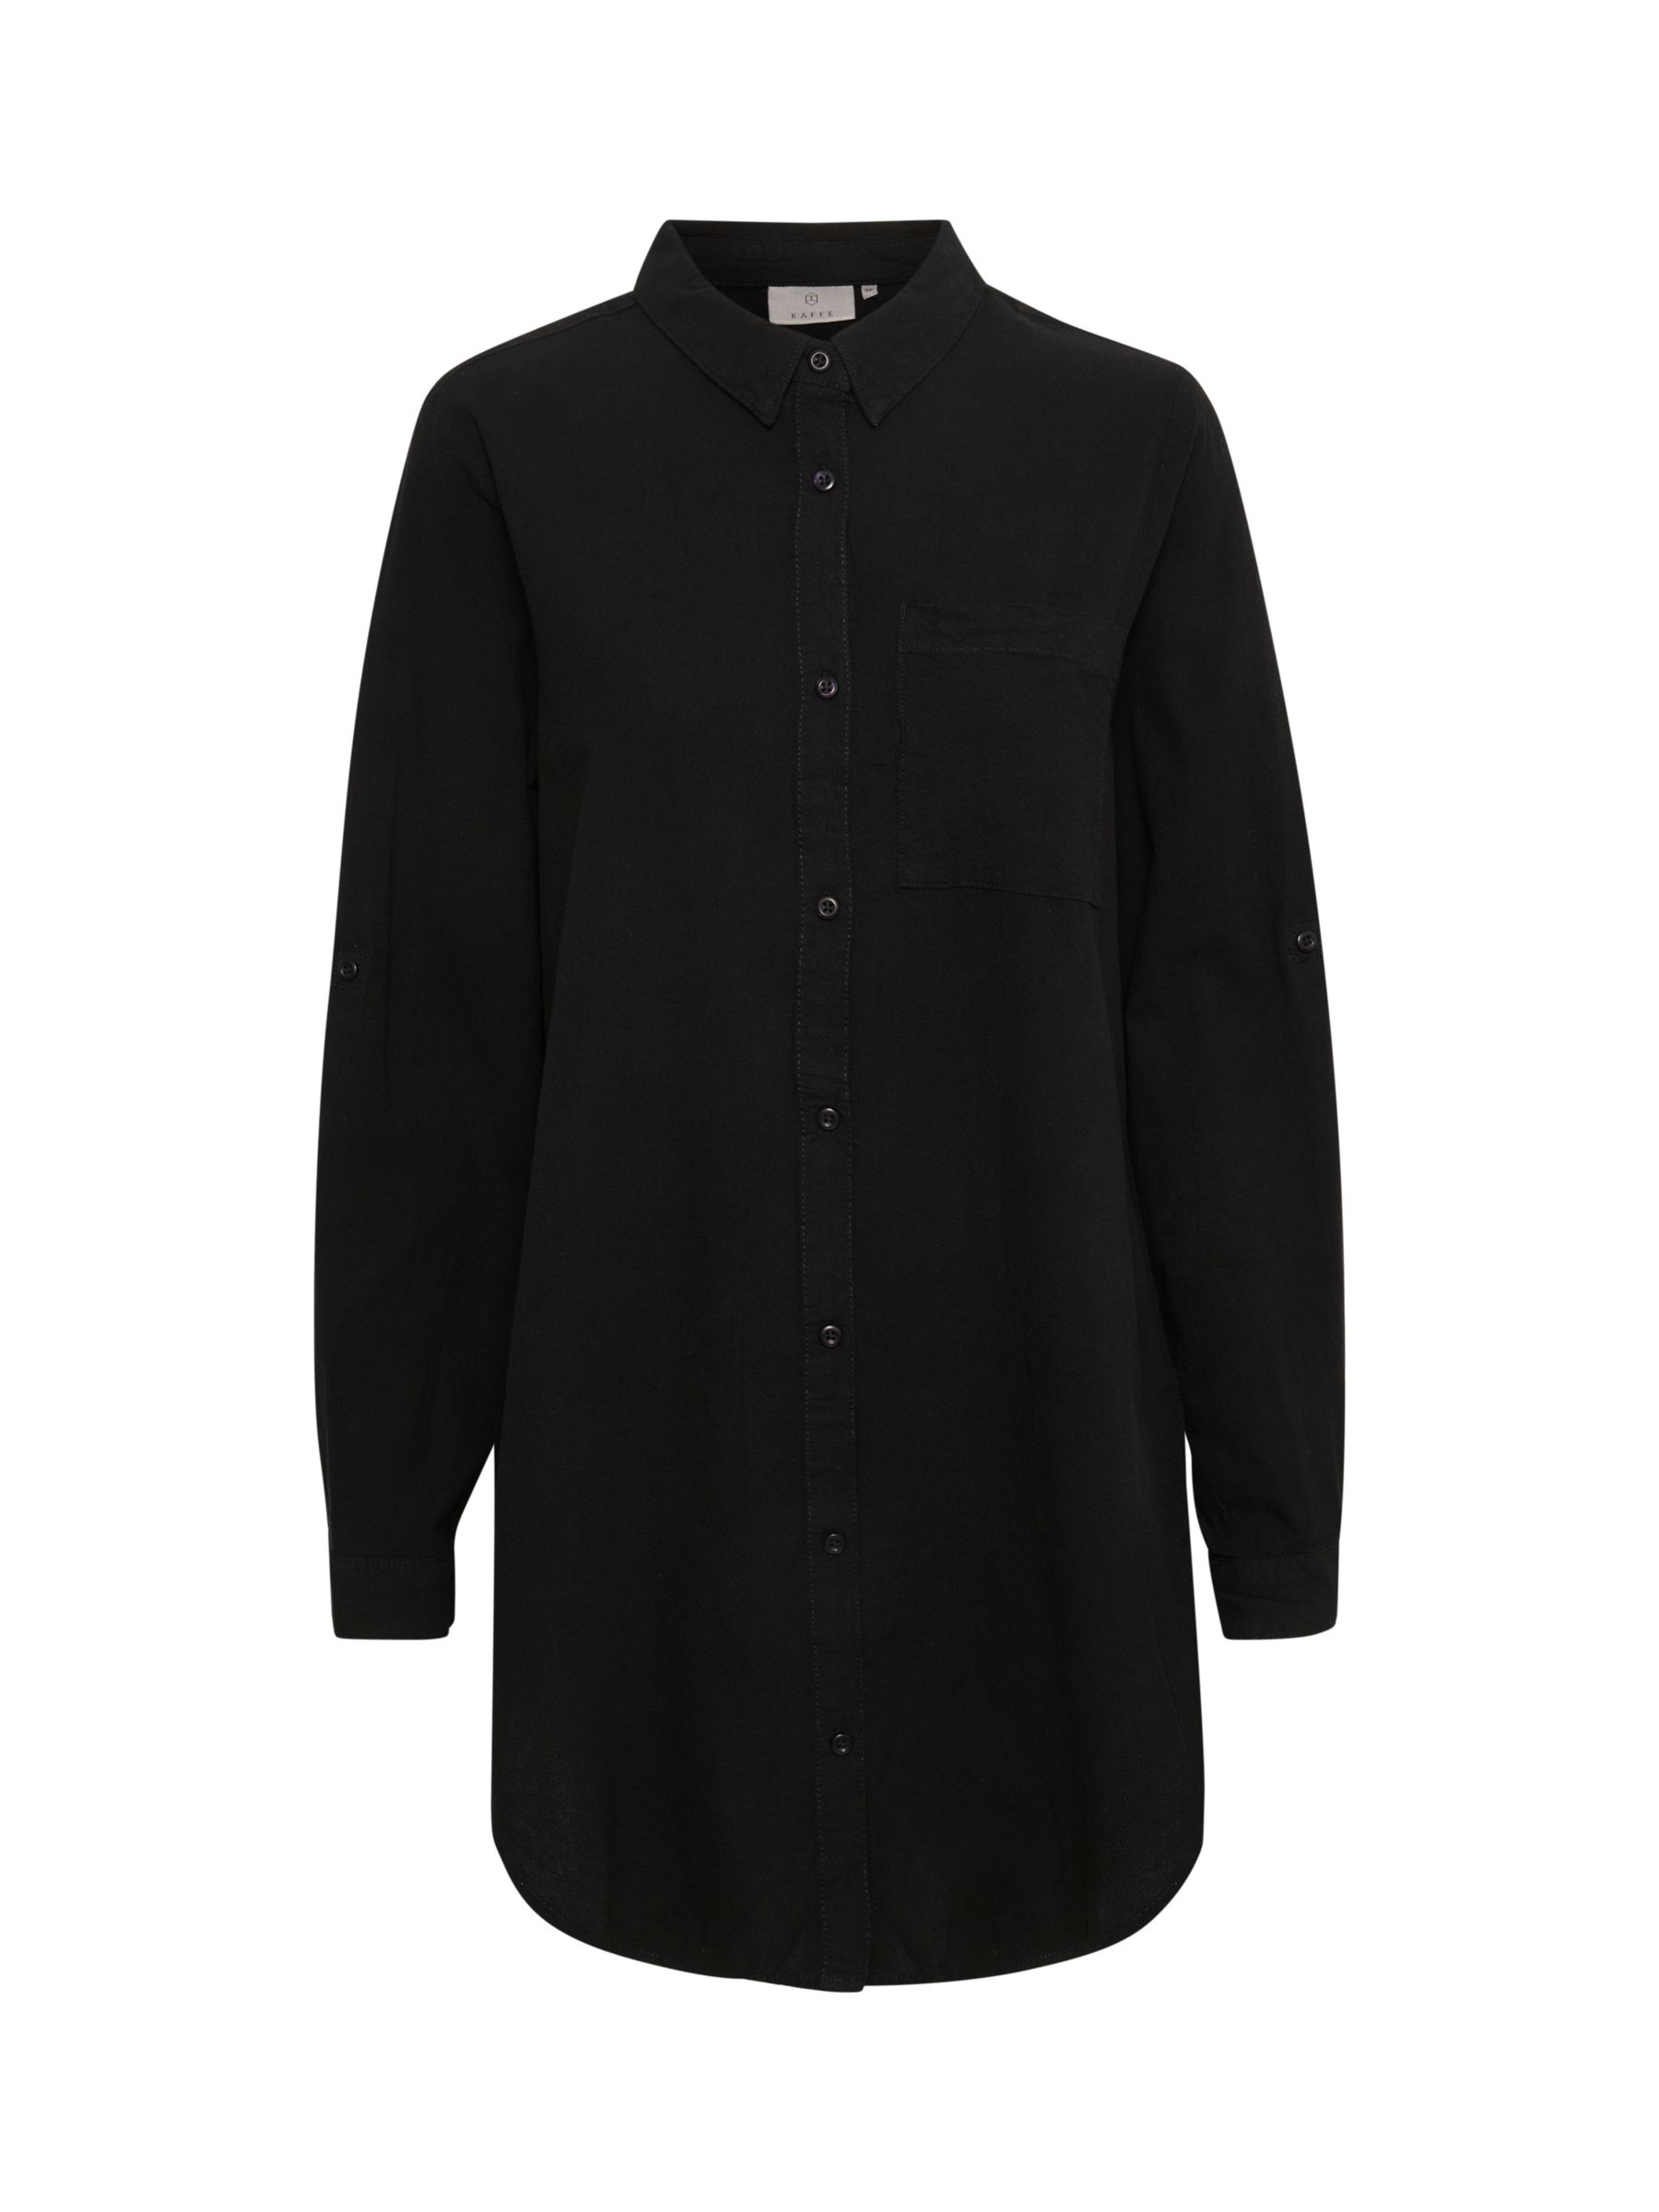 KAFFE Naya Tunic Shirt, Black Deep at John Lewis & Partners